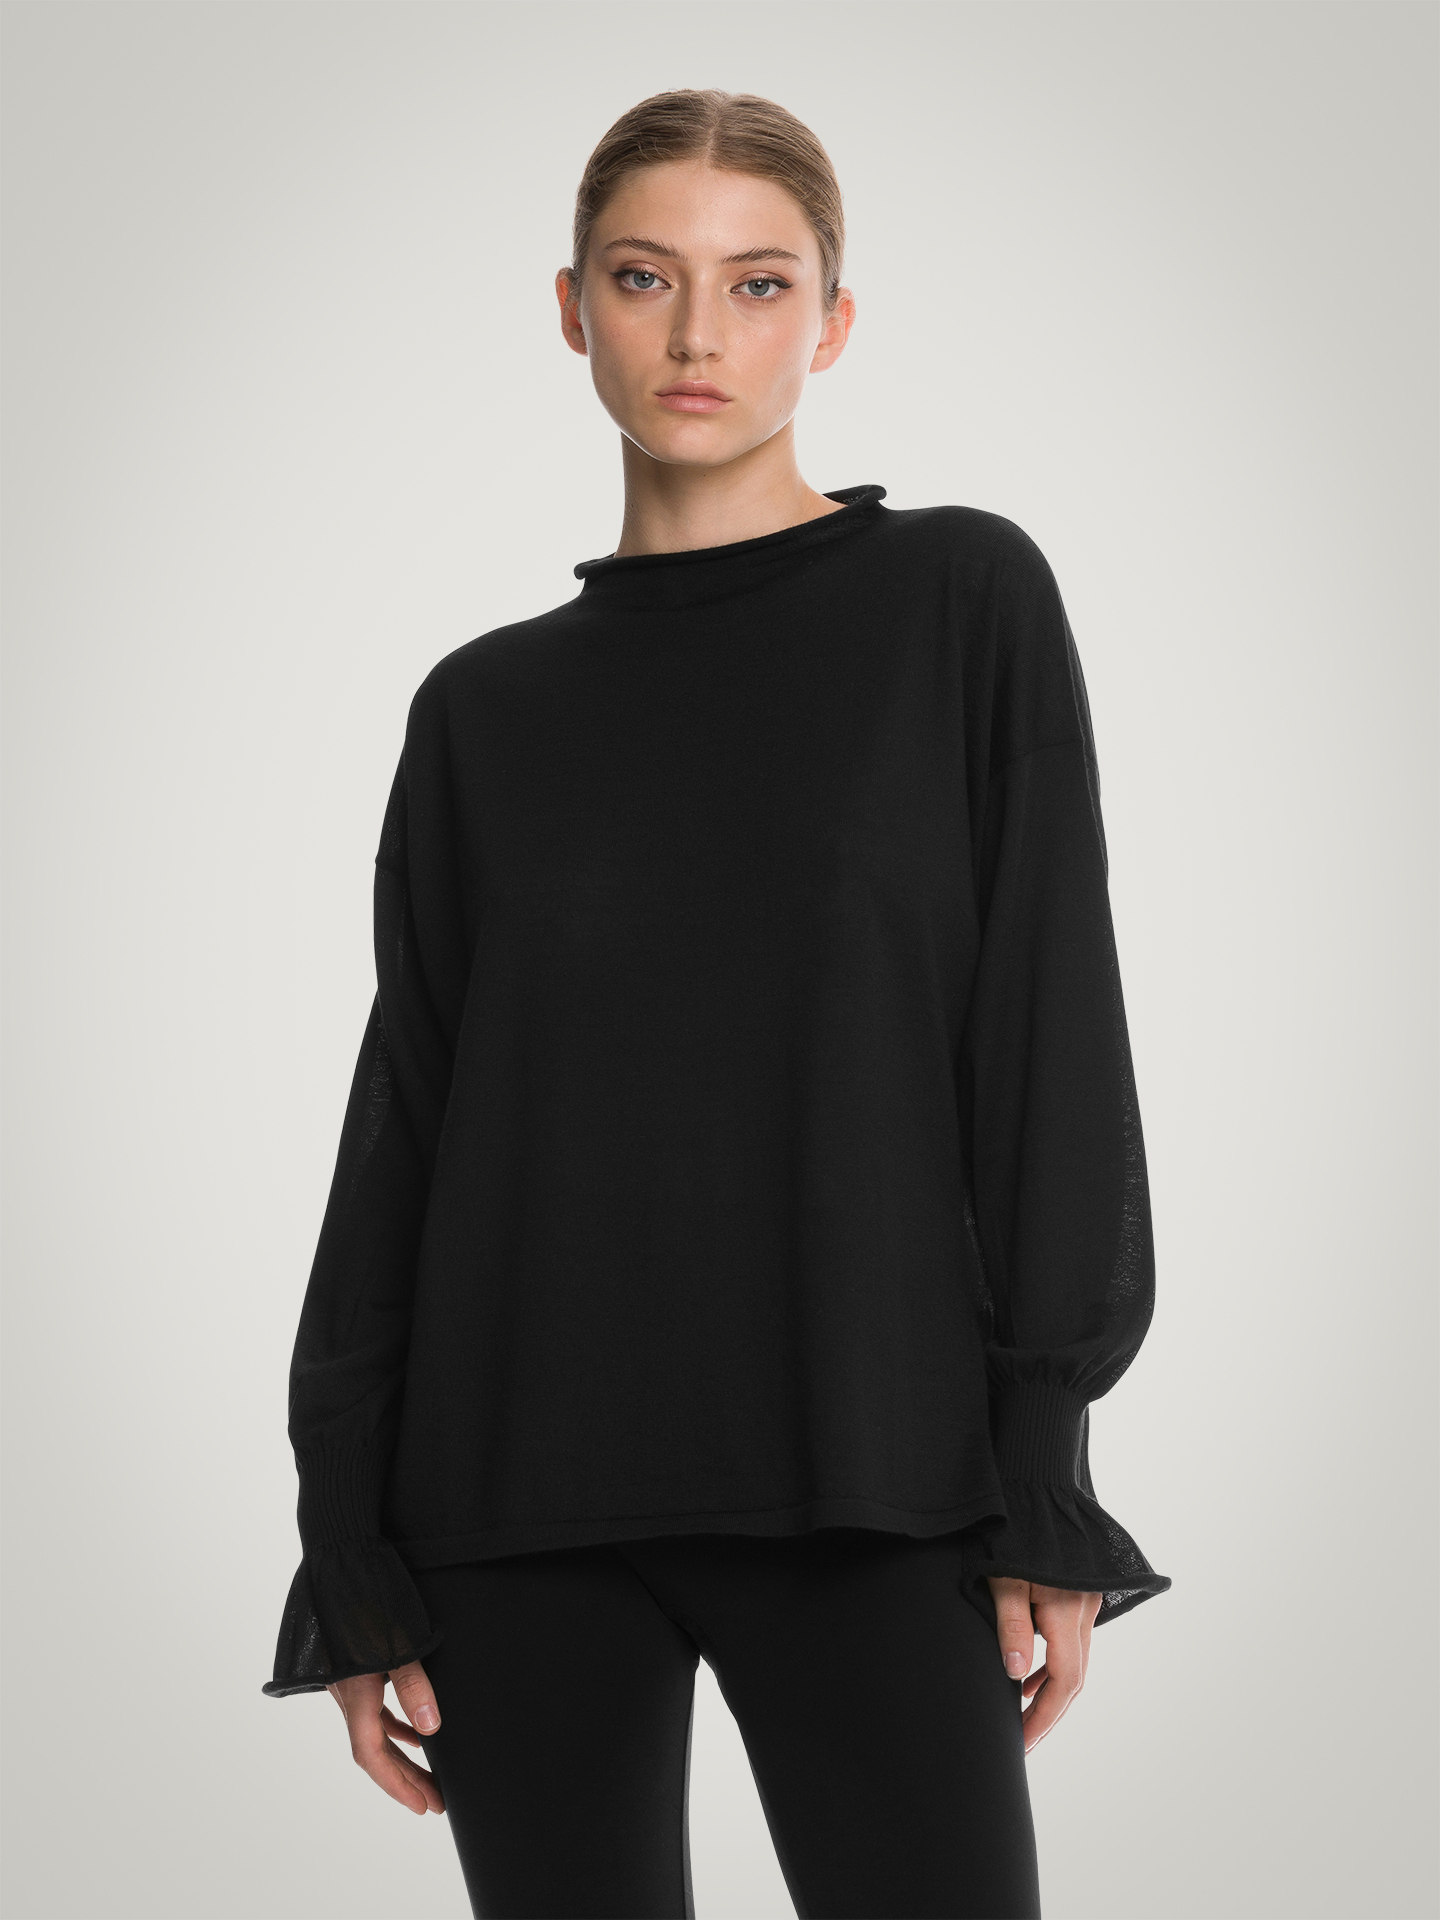 Wolford - Cashmere Loose Top Long Sleeve, Frau, black, Größe: M günstig online kaufen